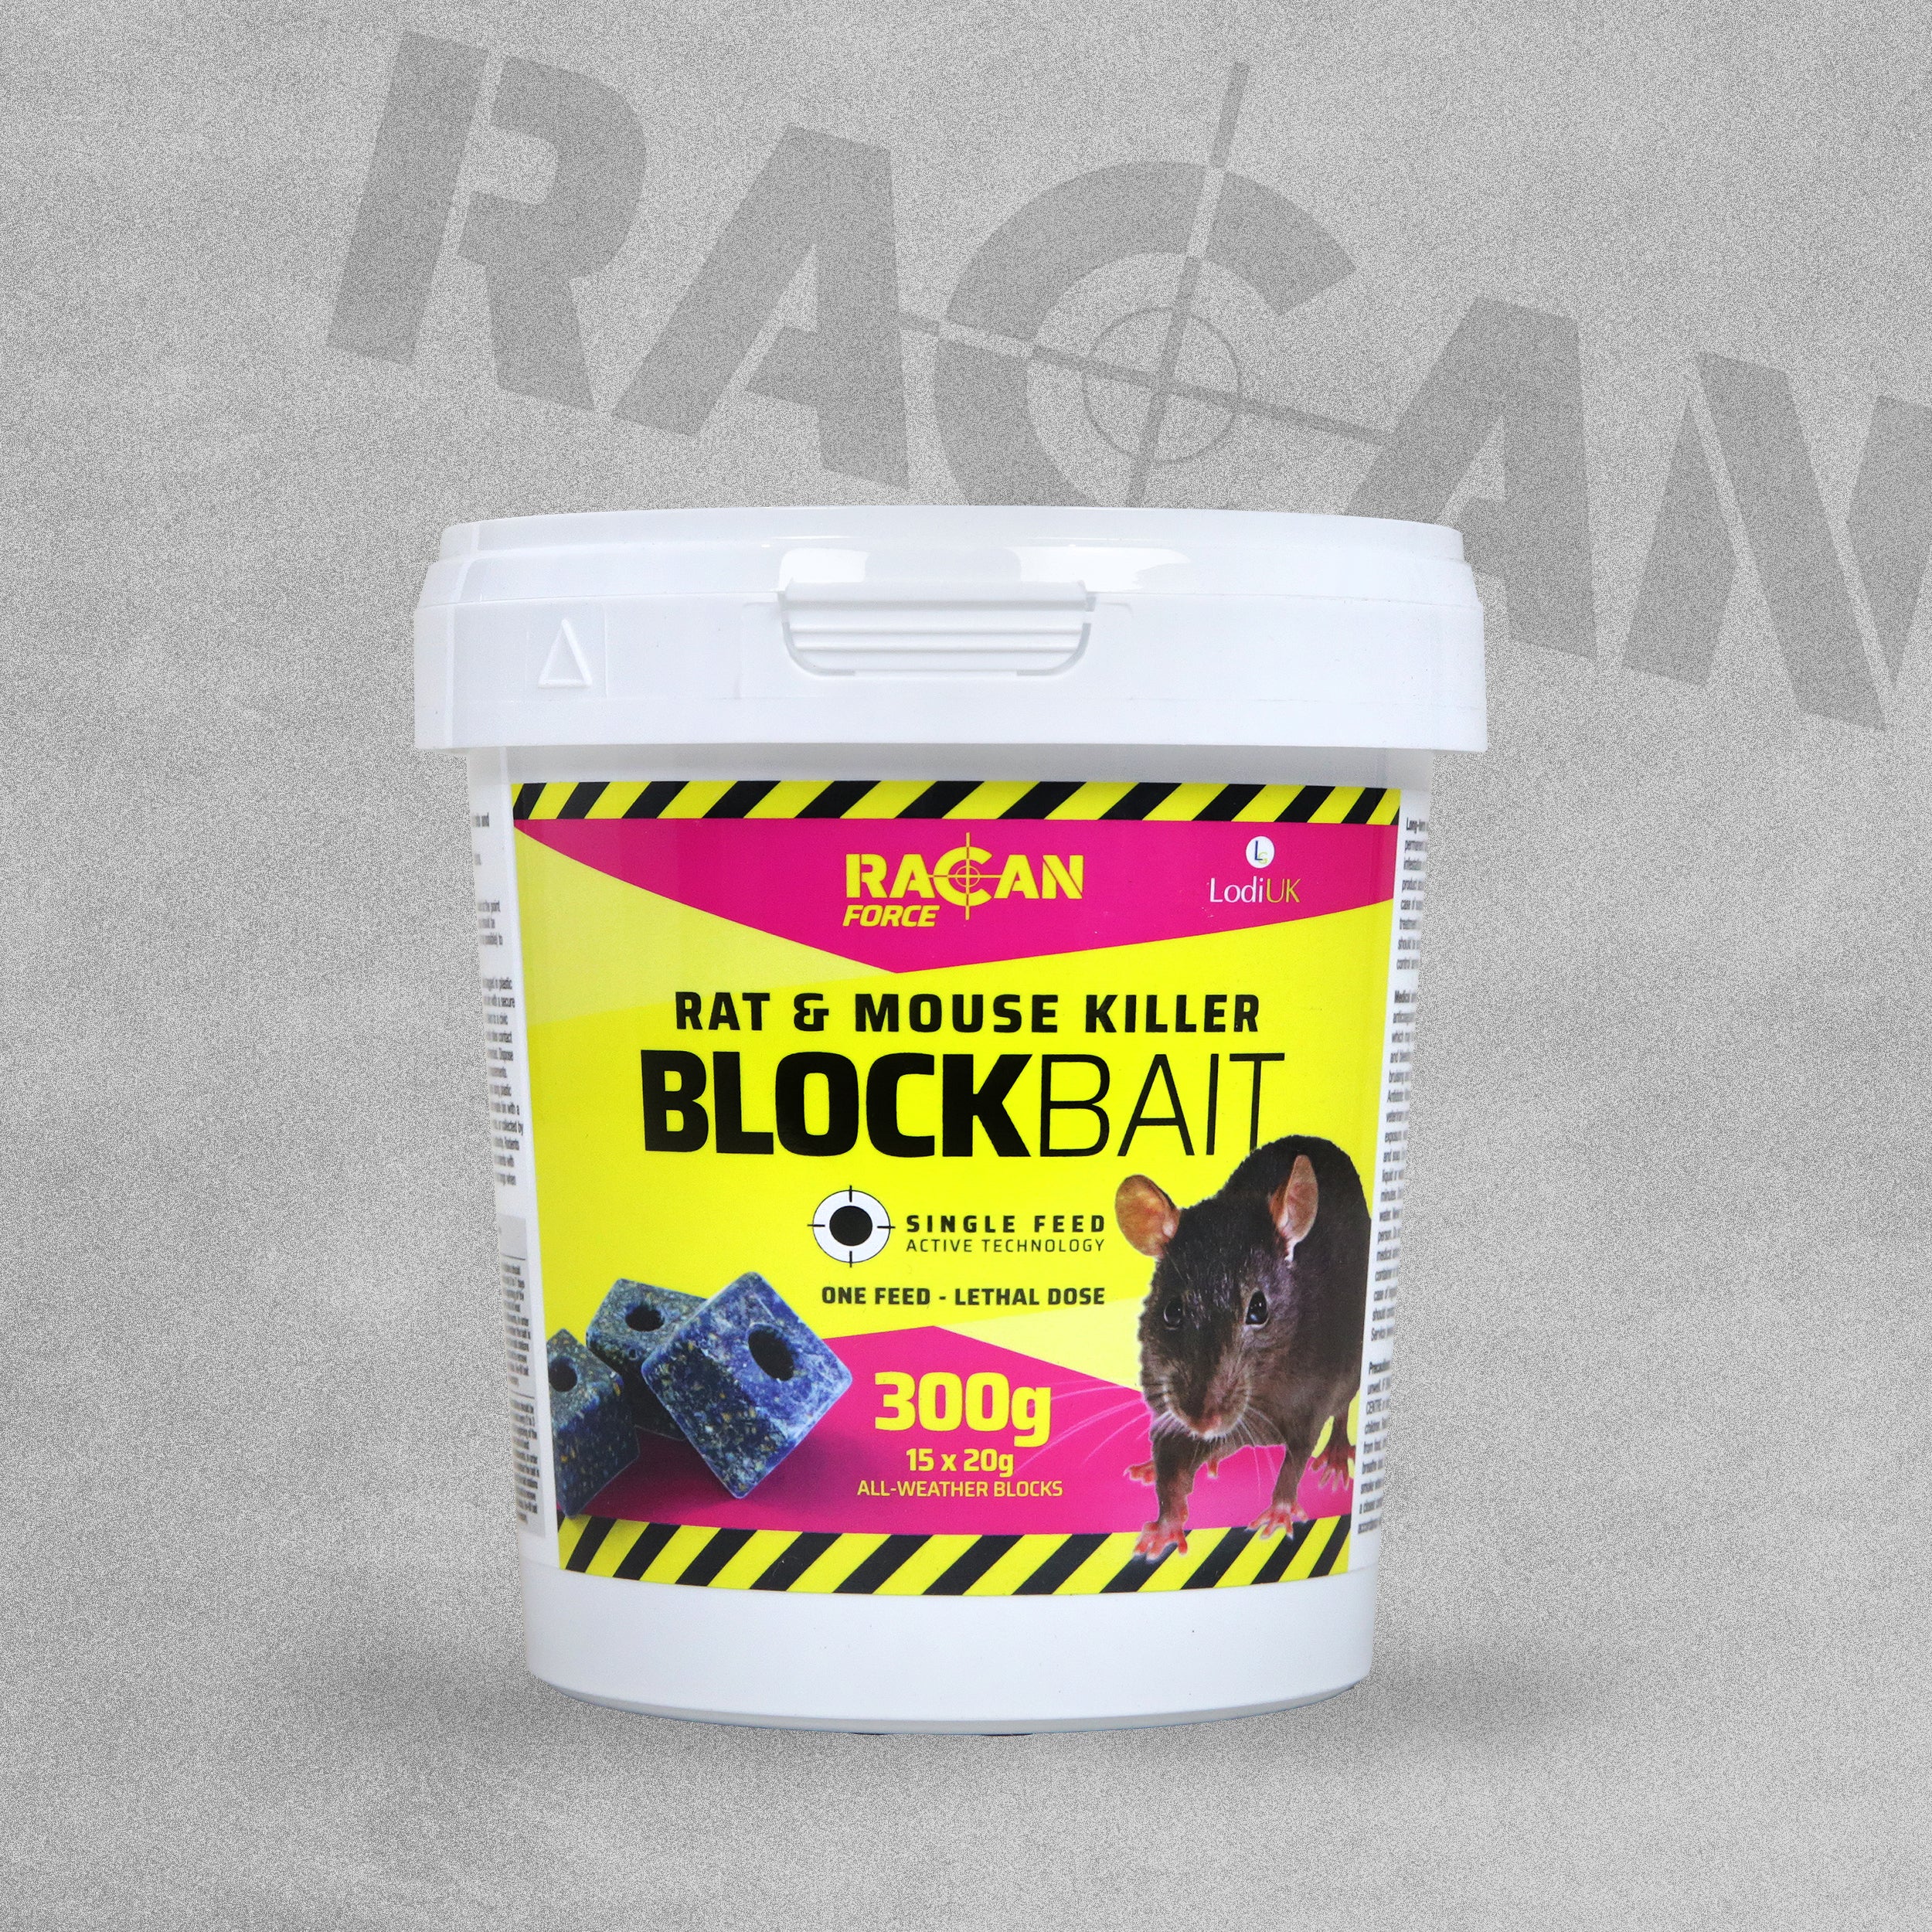 Racan Force Rat & Mouse Killer Blockbait - 15 x 20g Blocks